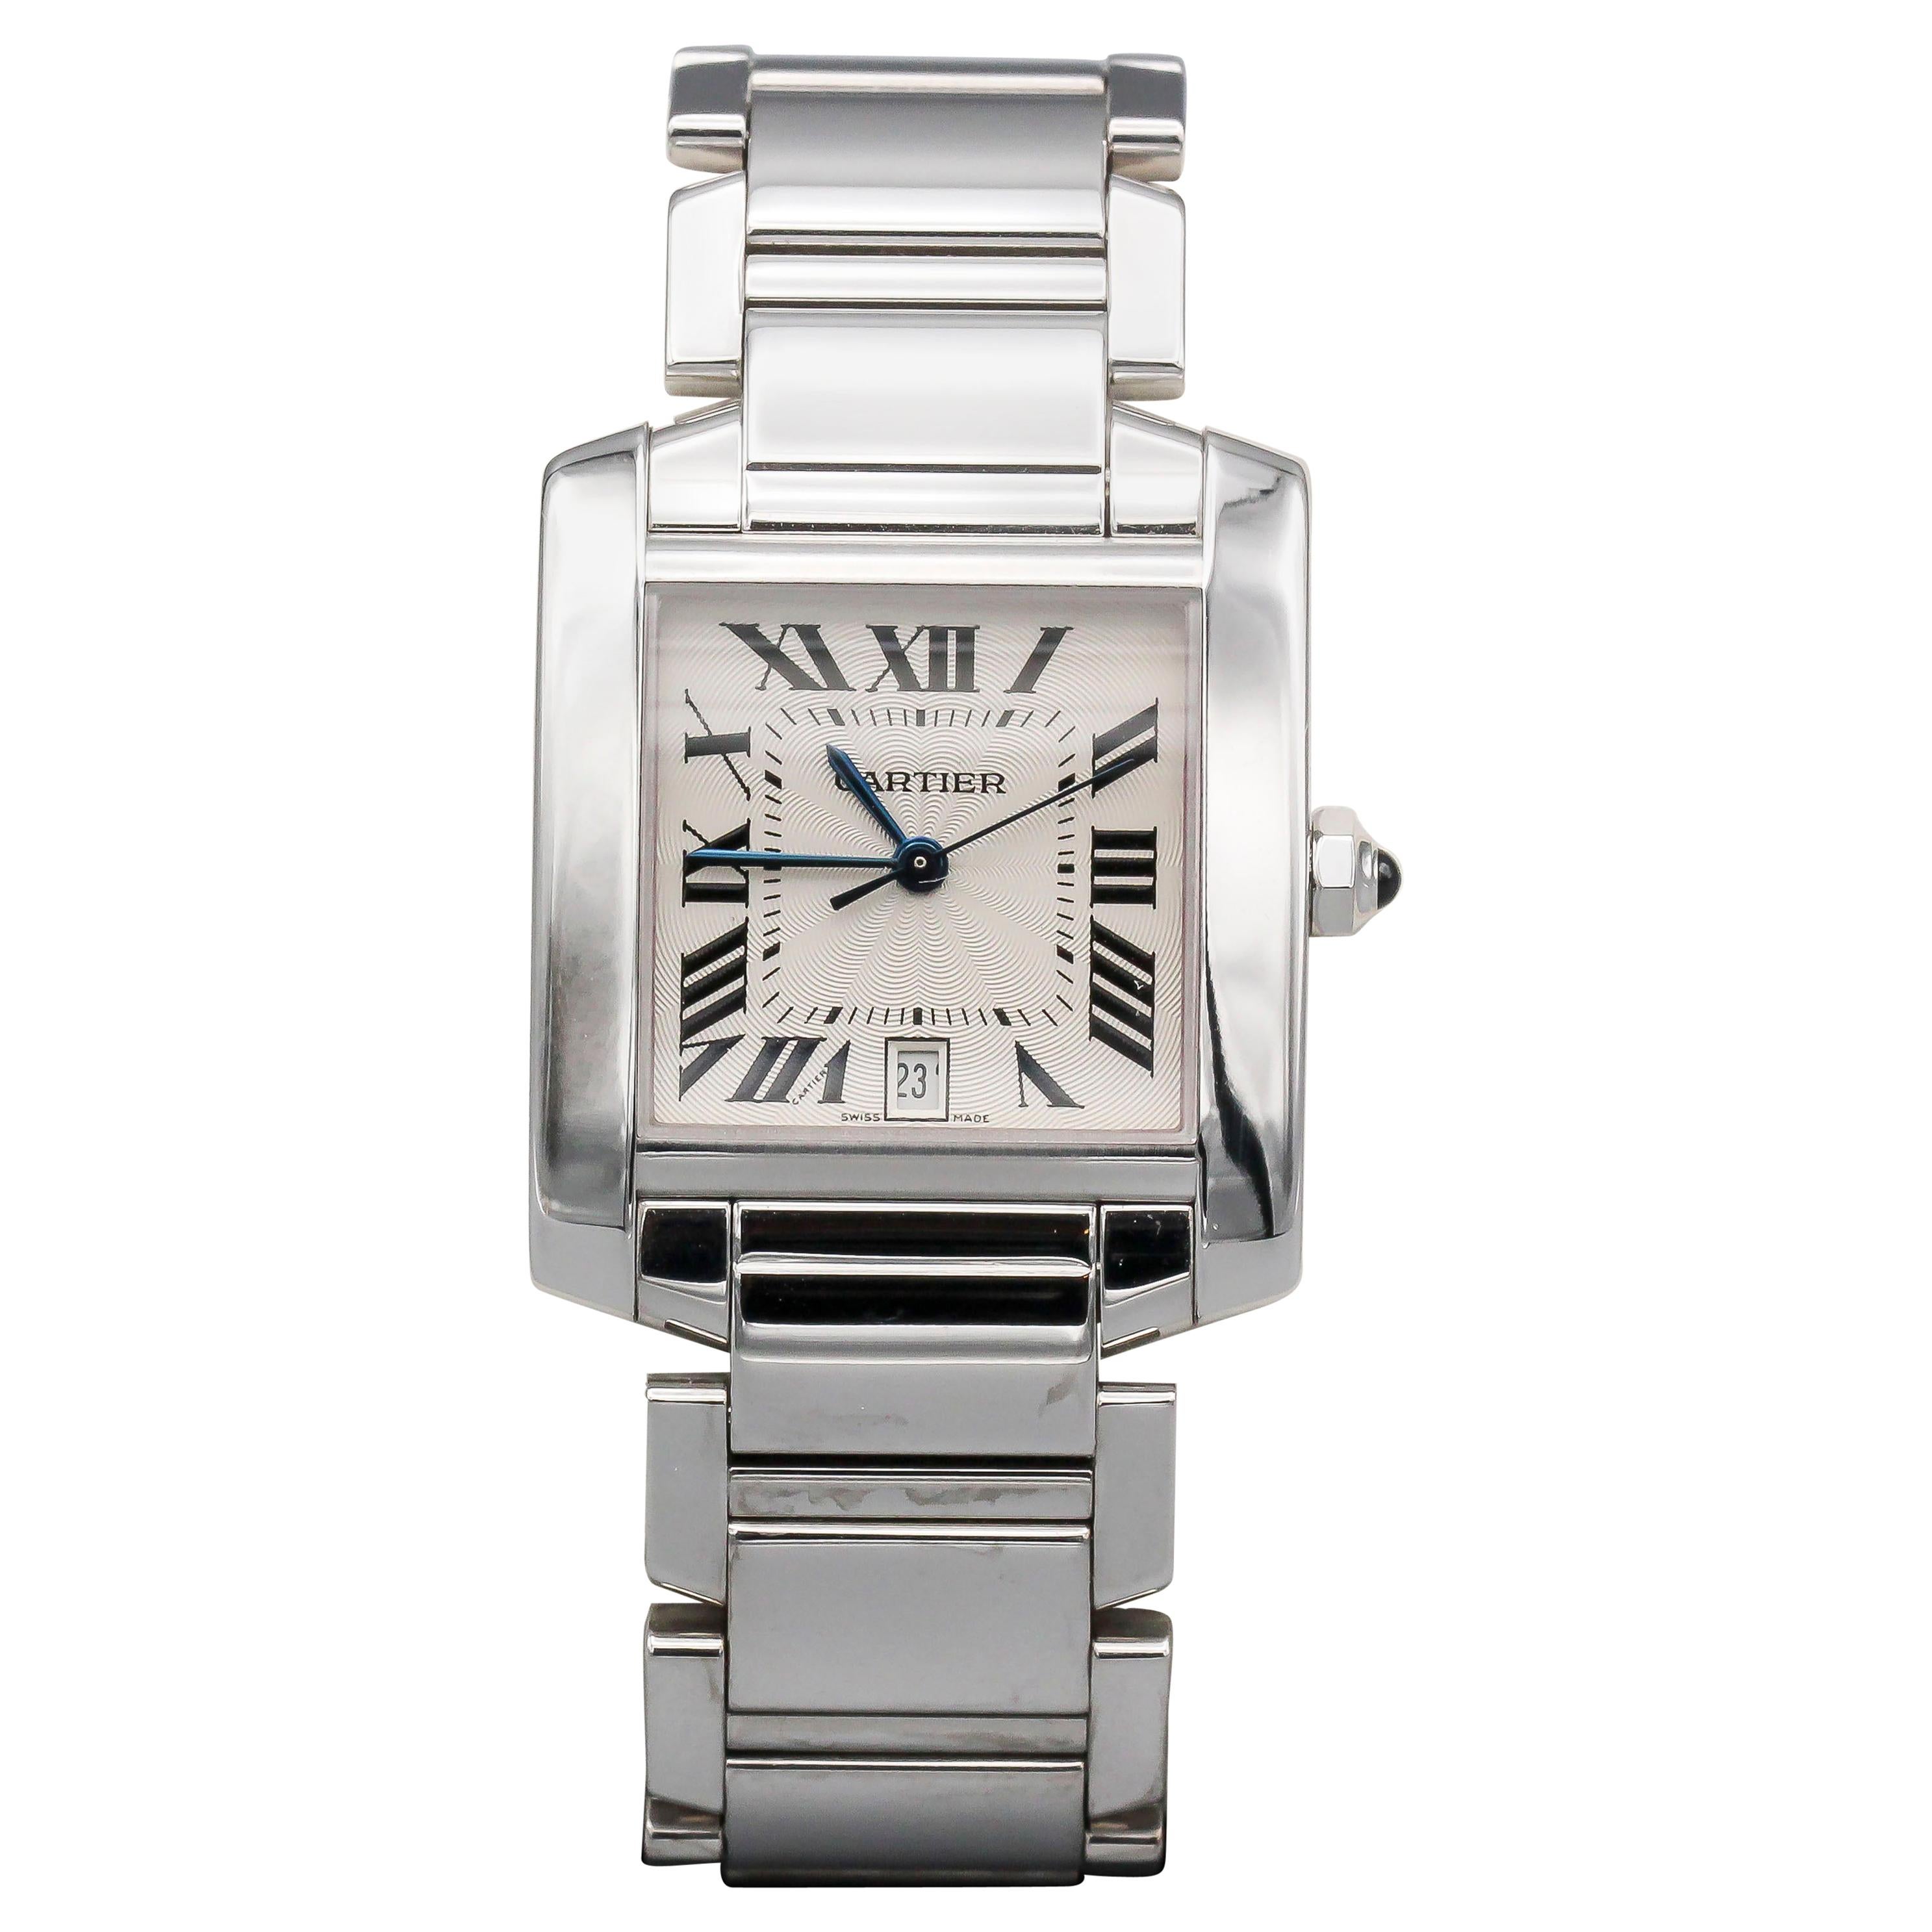 Cartier 18 Karat White Gold Tank Francaise Date Midsize Wristwatch